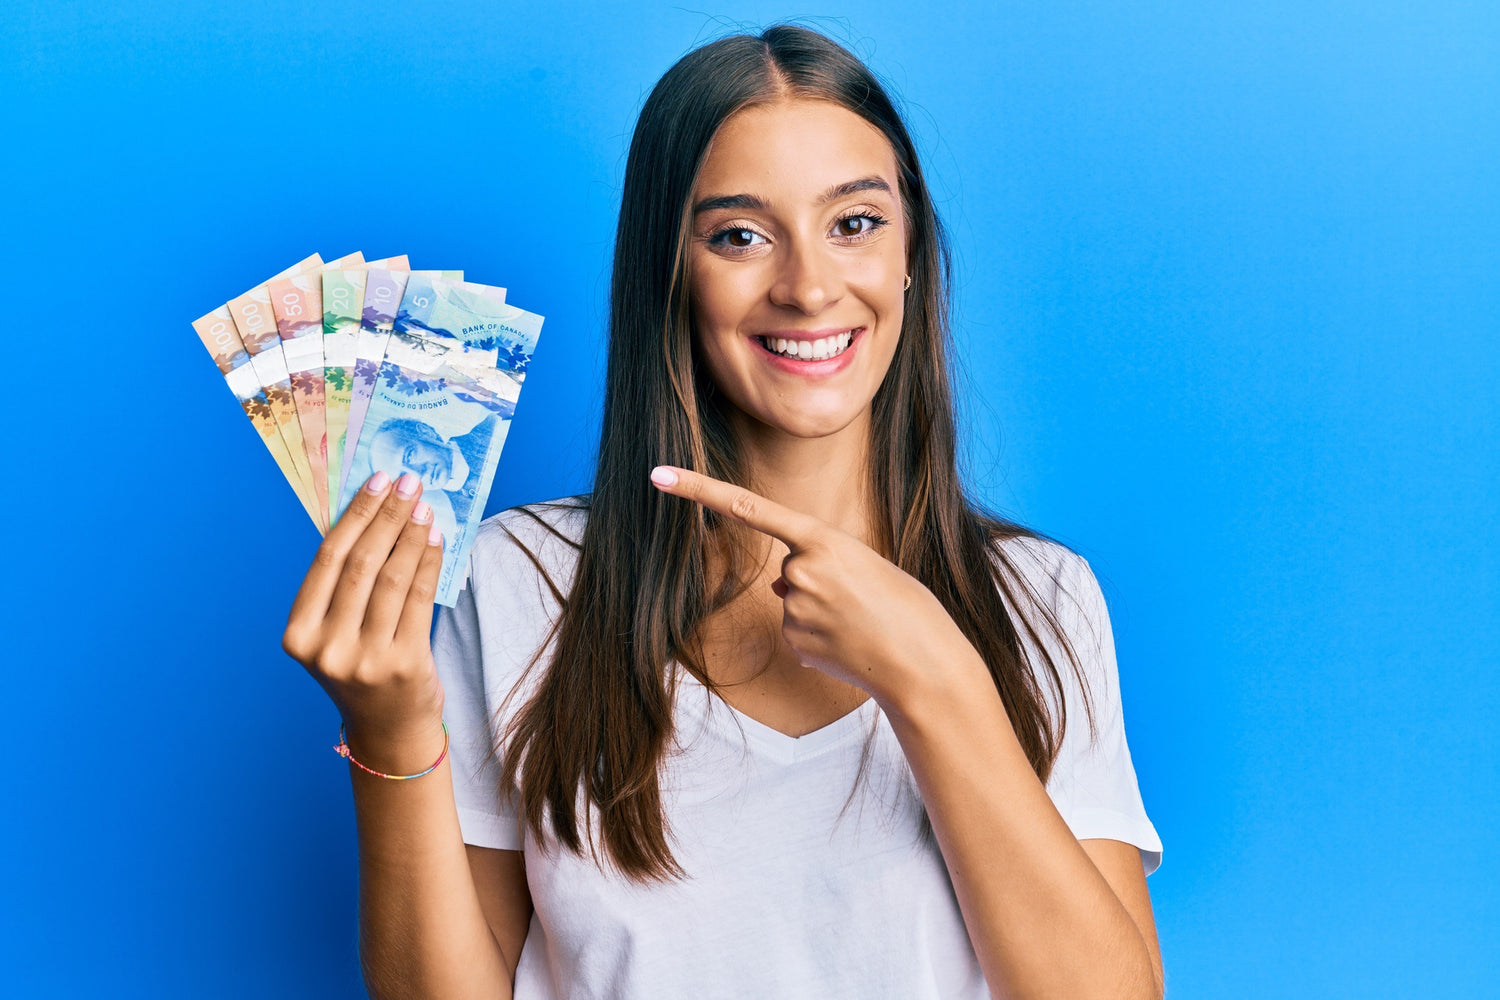 Smiling woman holding Canadian dollars to symbolize savings from vaping vs. smoking